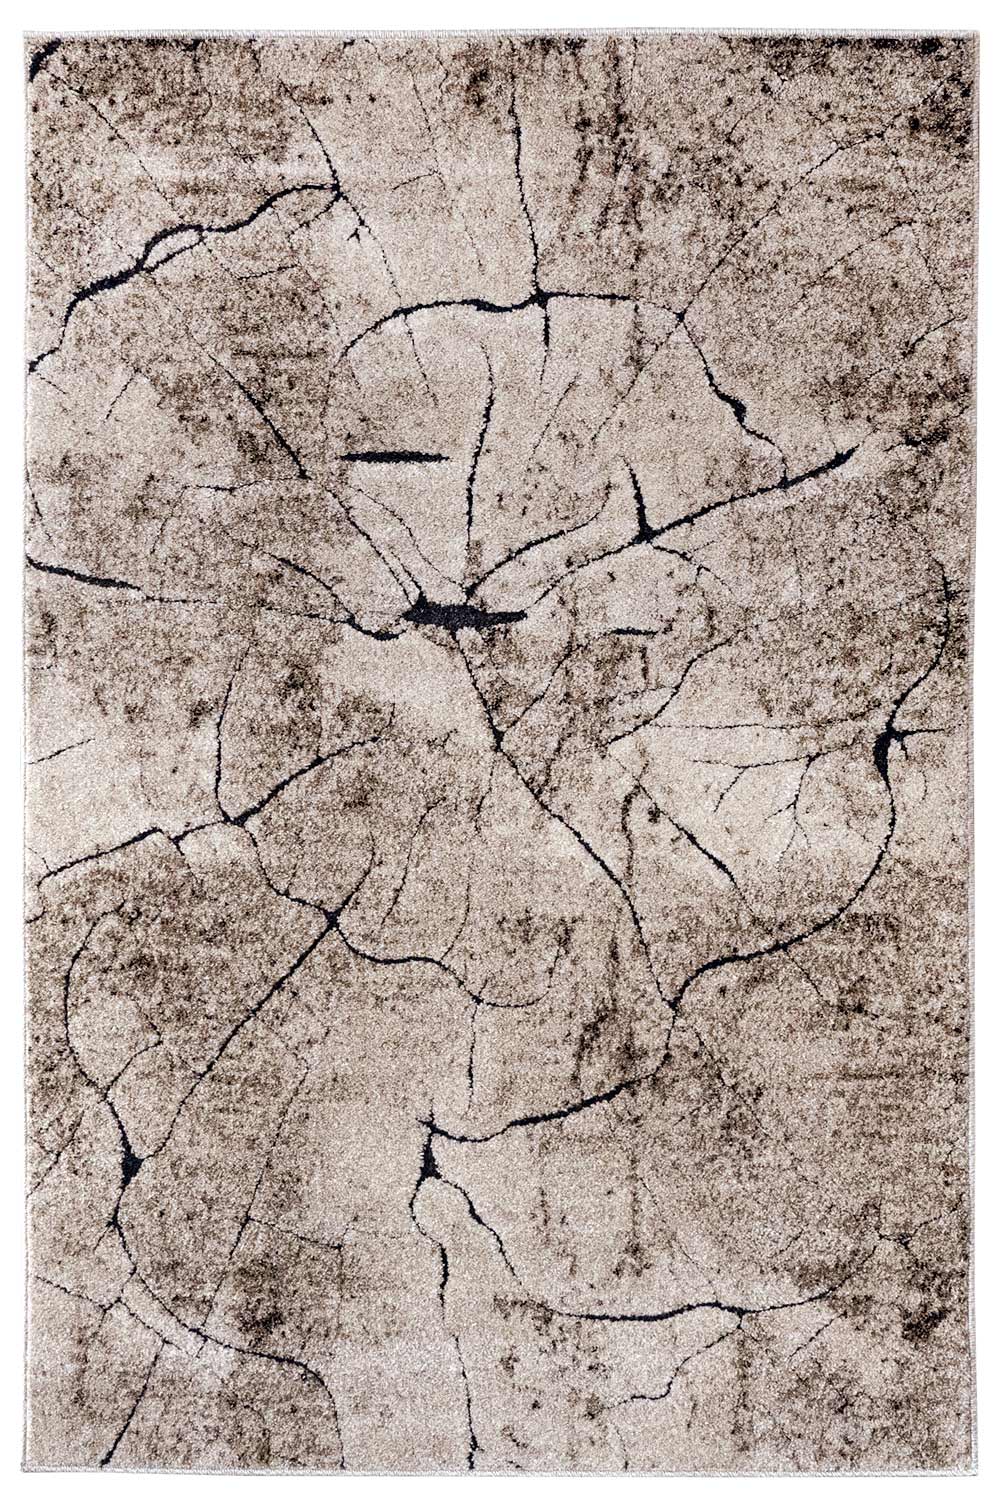 Kusový koberec MIAMI 129 Beige 120x180 cm